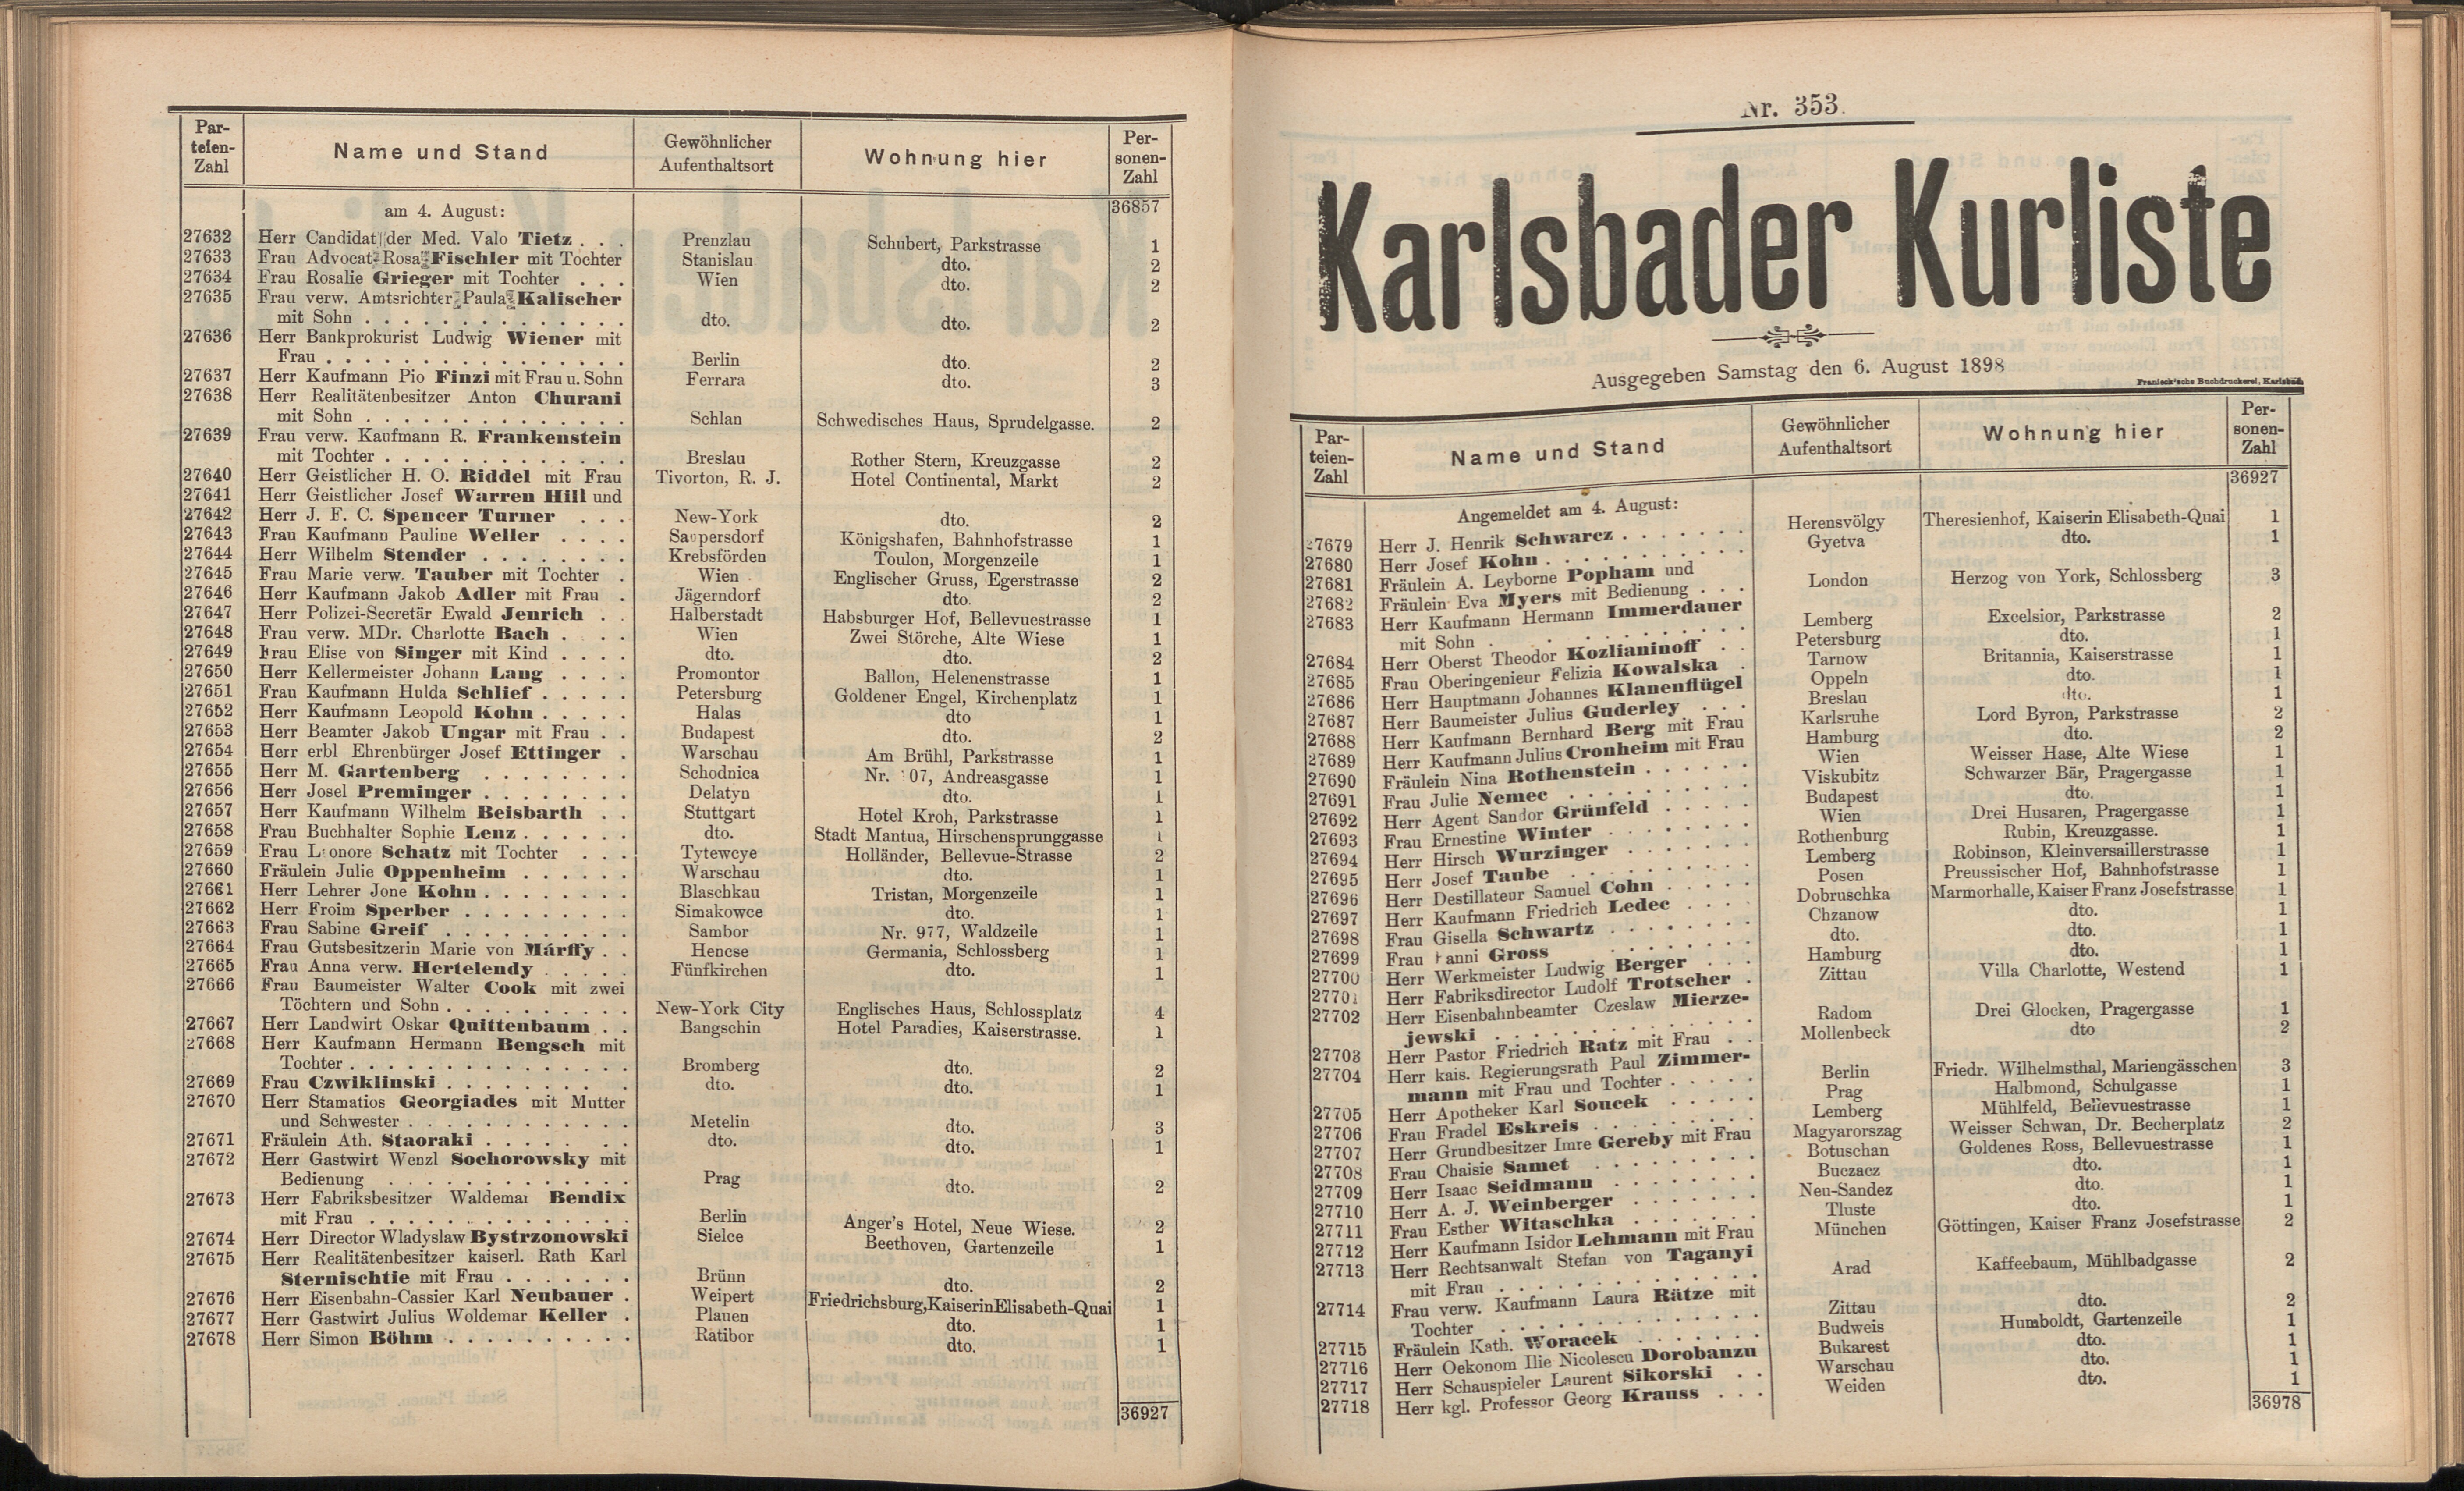 369. soap-kv_knihovna_karlsbader-kurliste-1898_3700